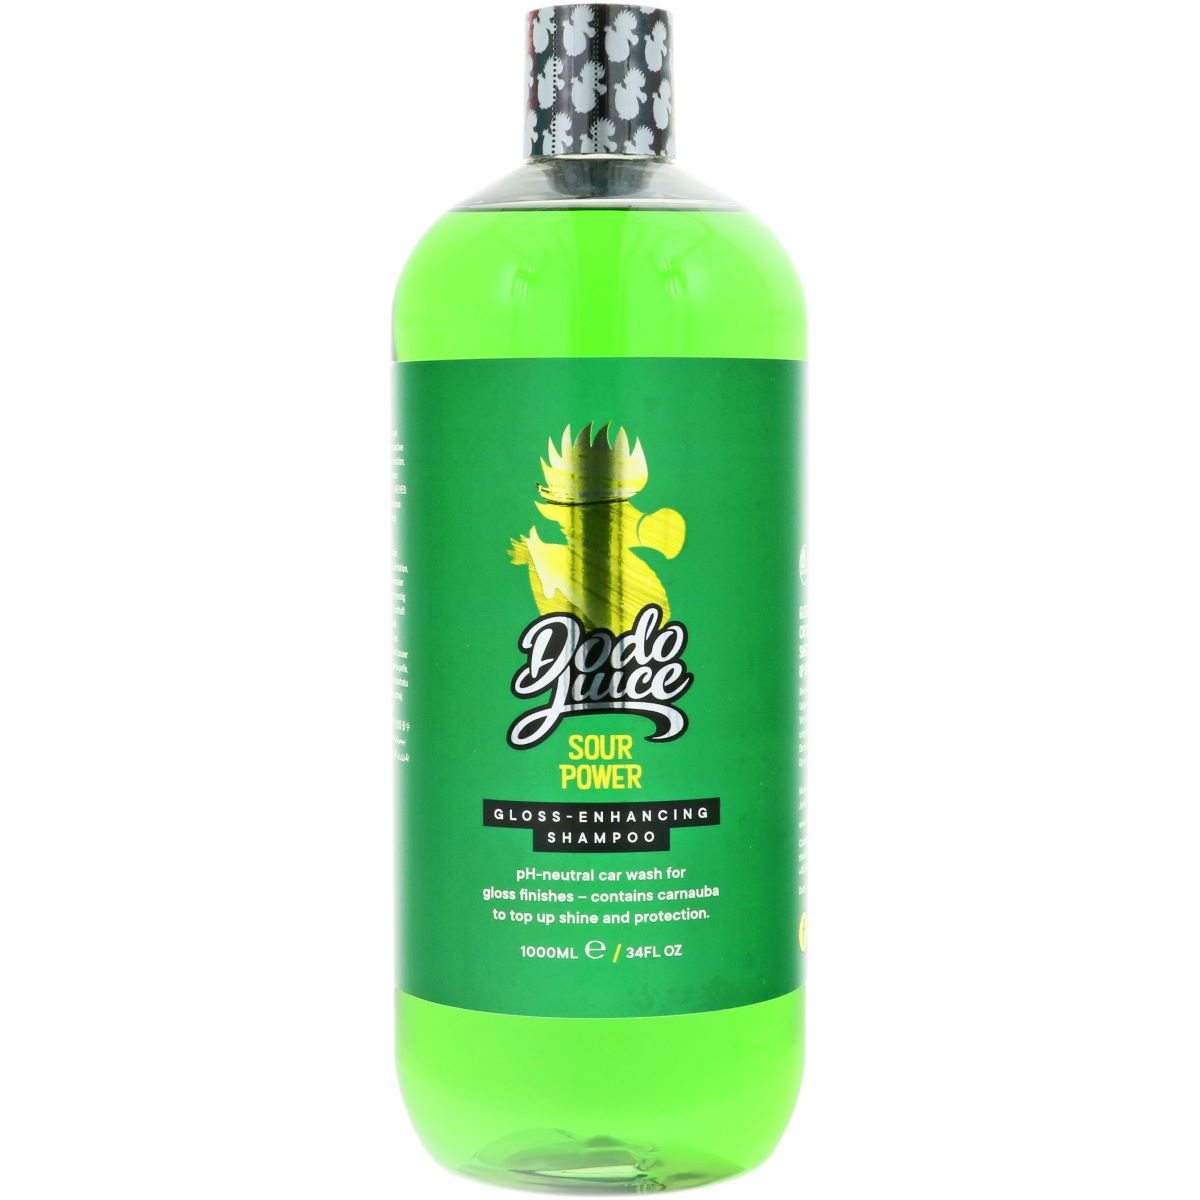 Sour Power gloss-enhancing shampoo - 1000ml